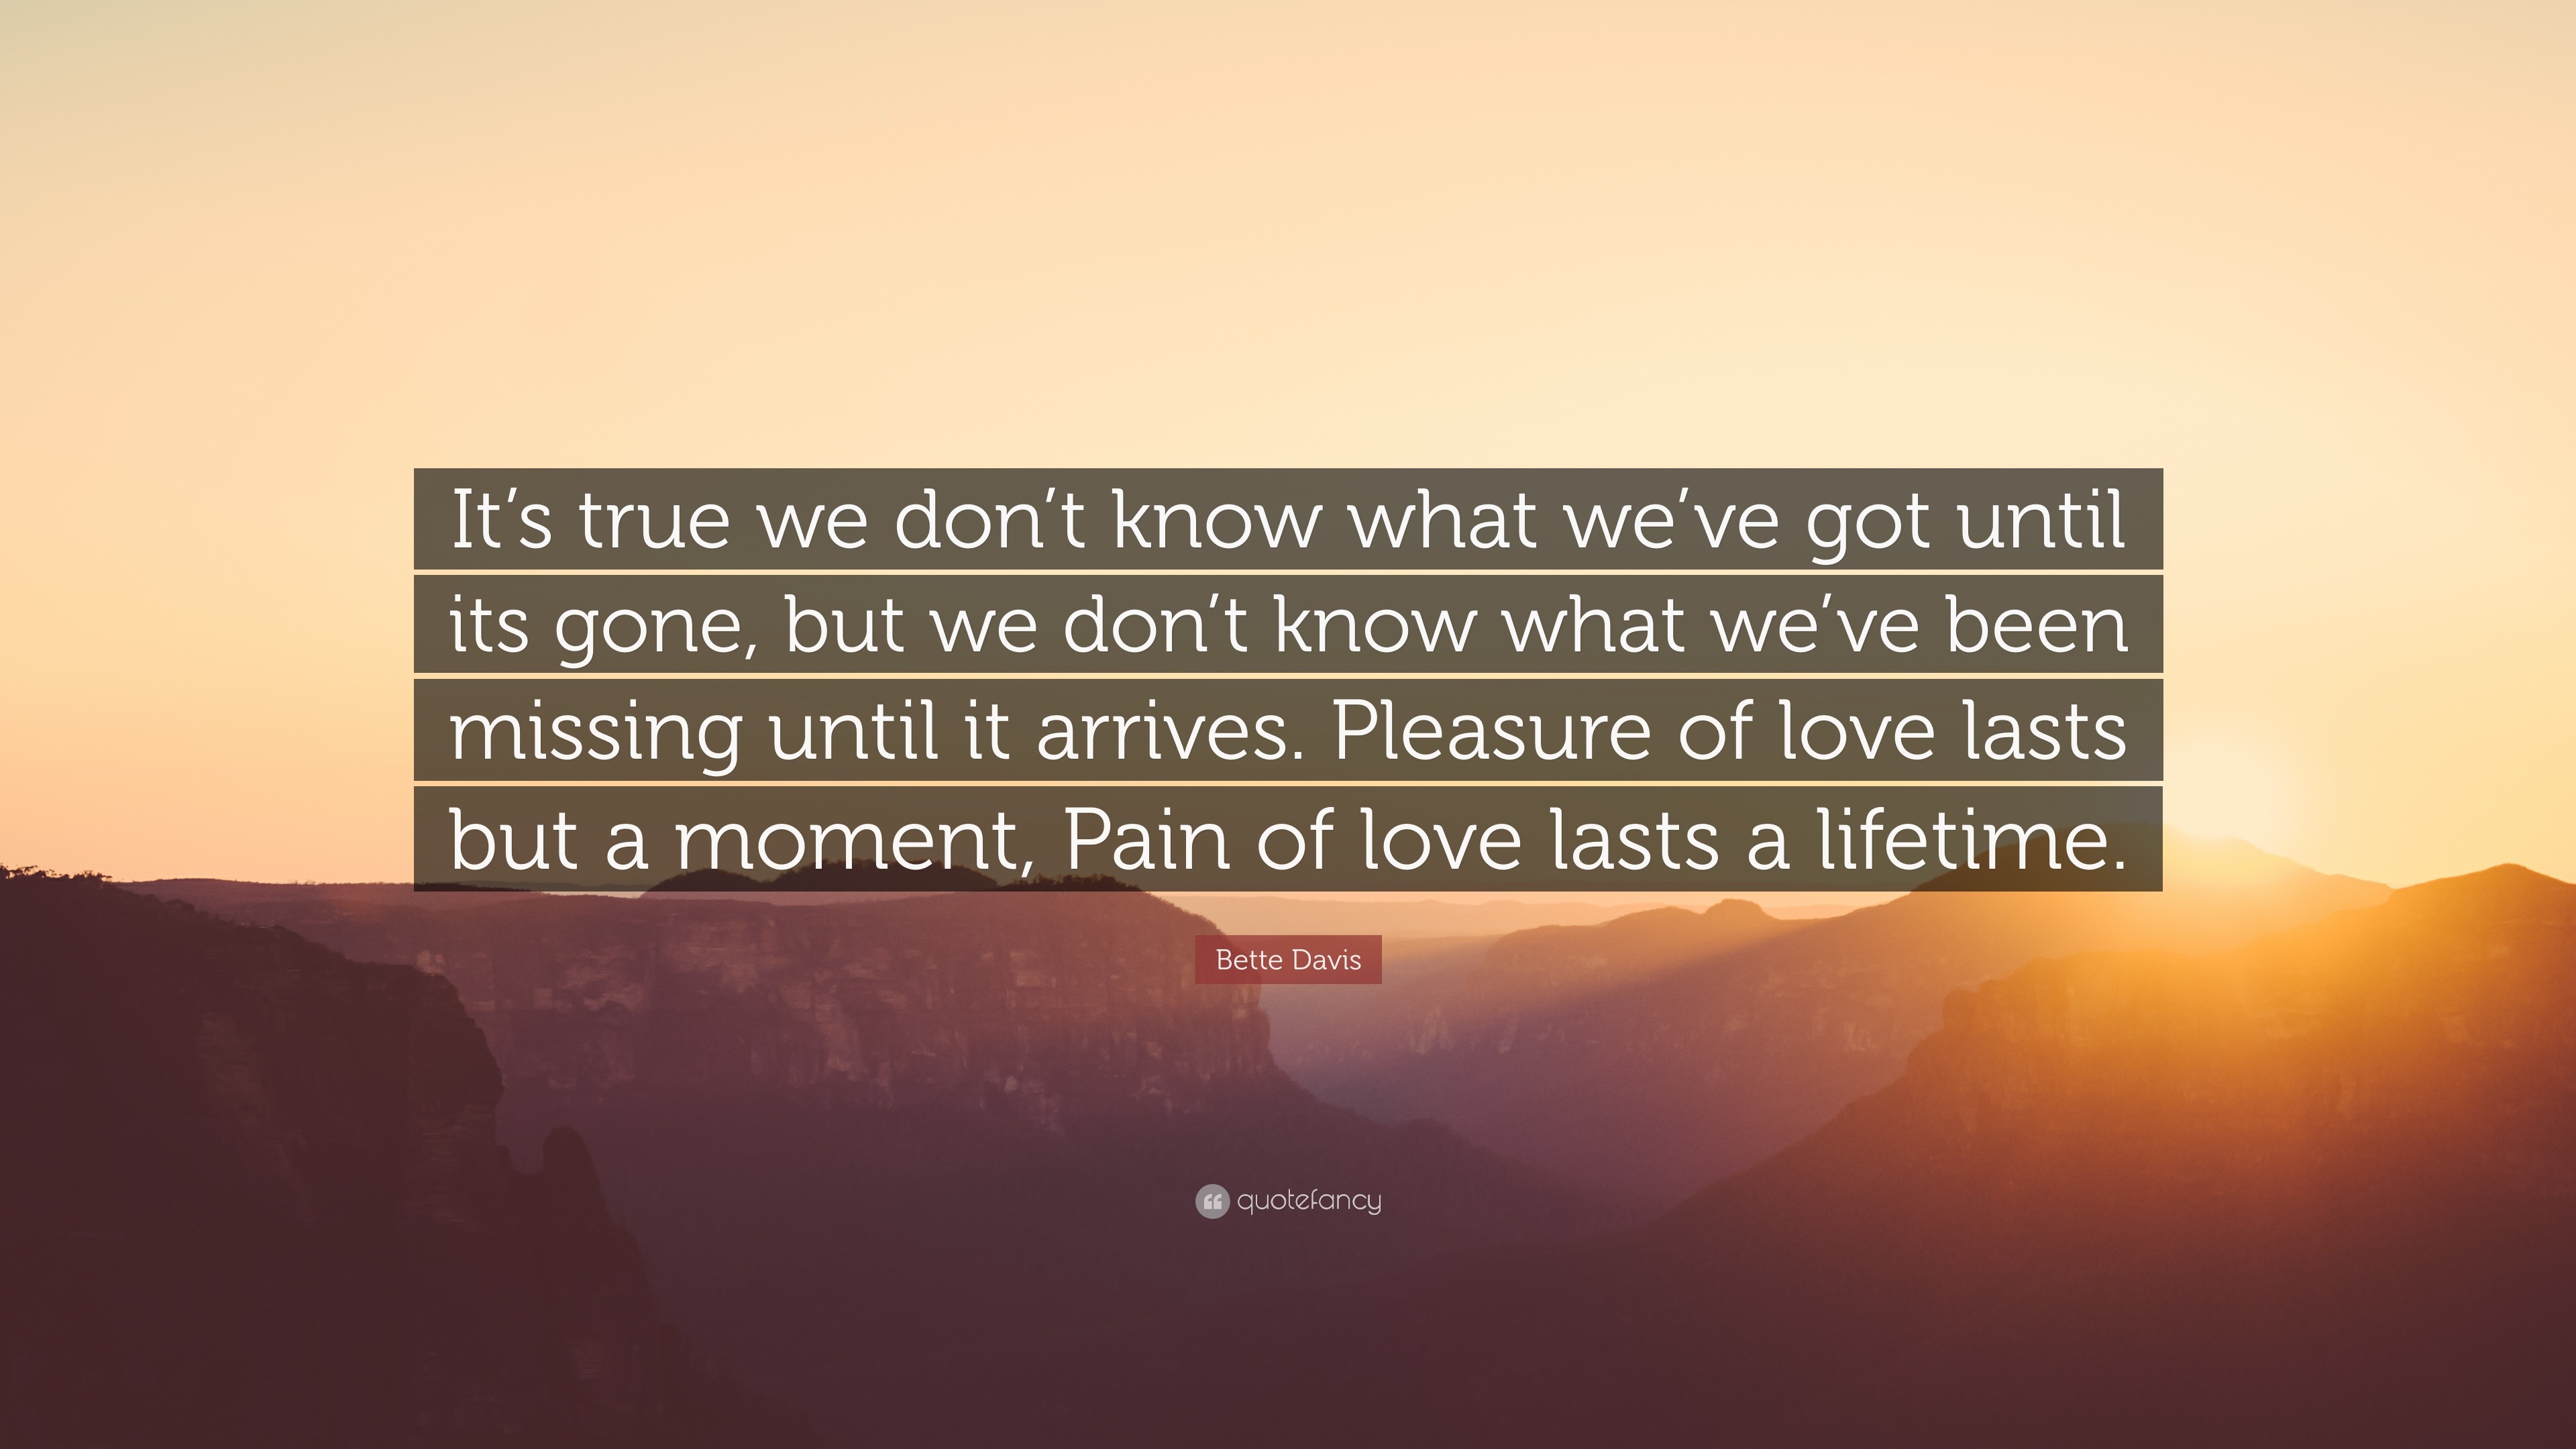 Bette Davis Quote “It s true we don t know what we ve